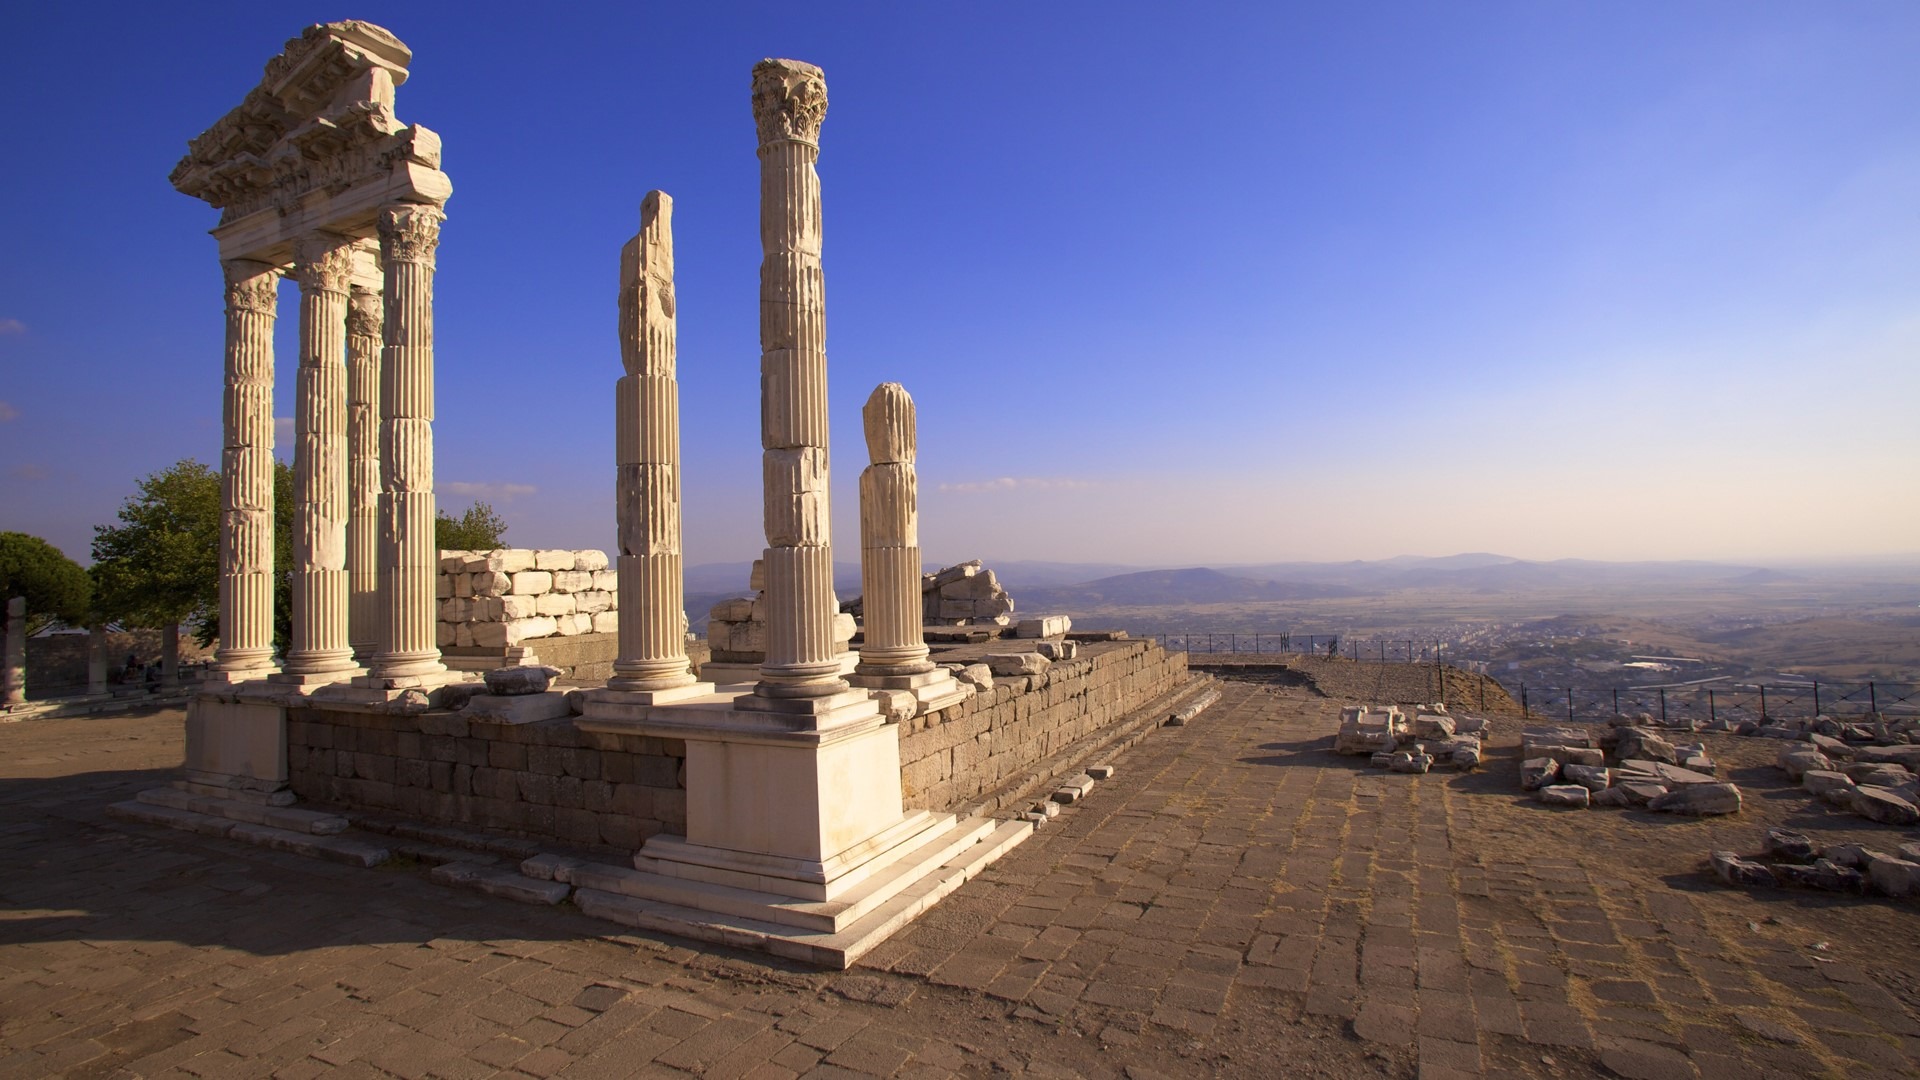 General 1920x1080 Temple of Hercules Amman Jordan (country) ruins architecture column old building